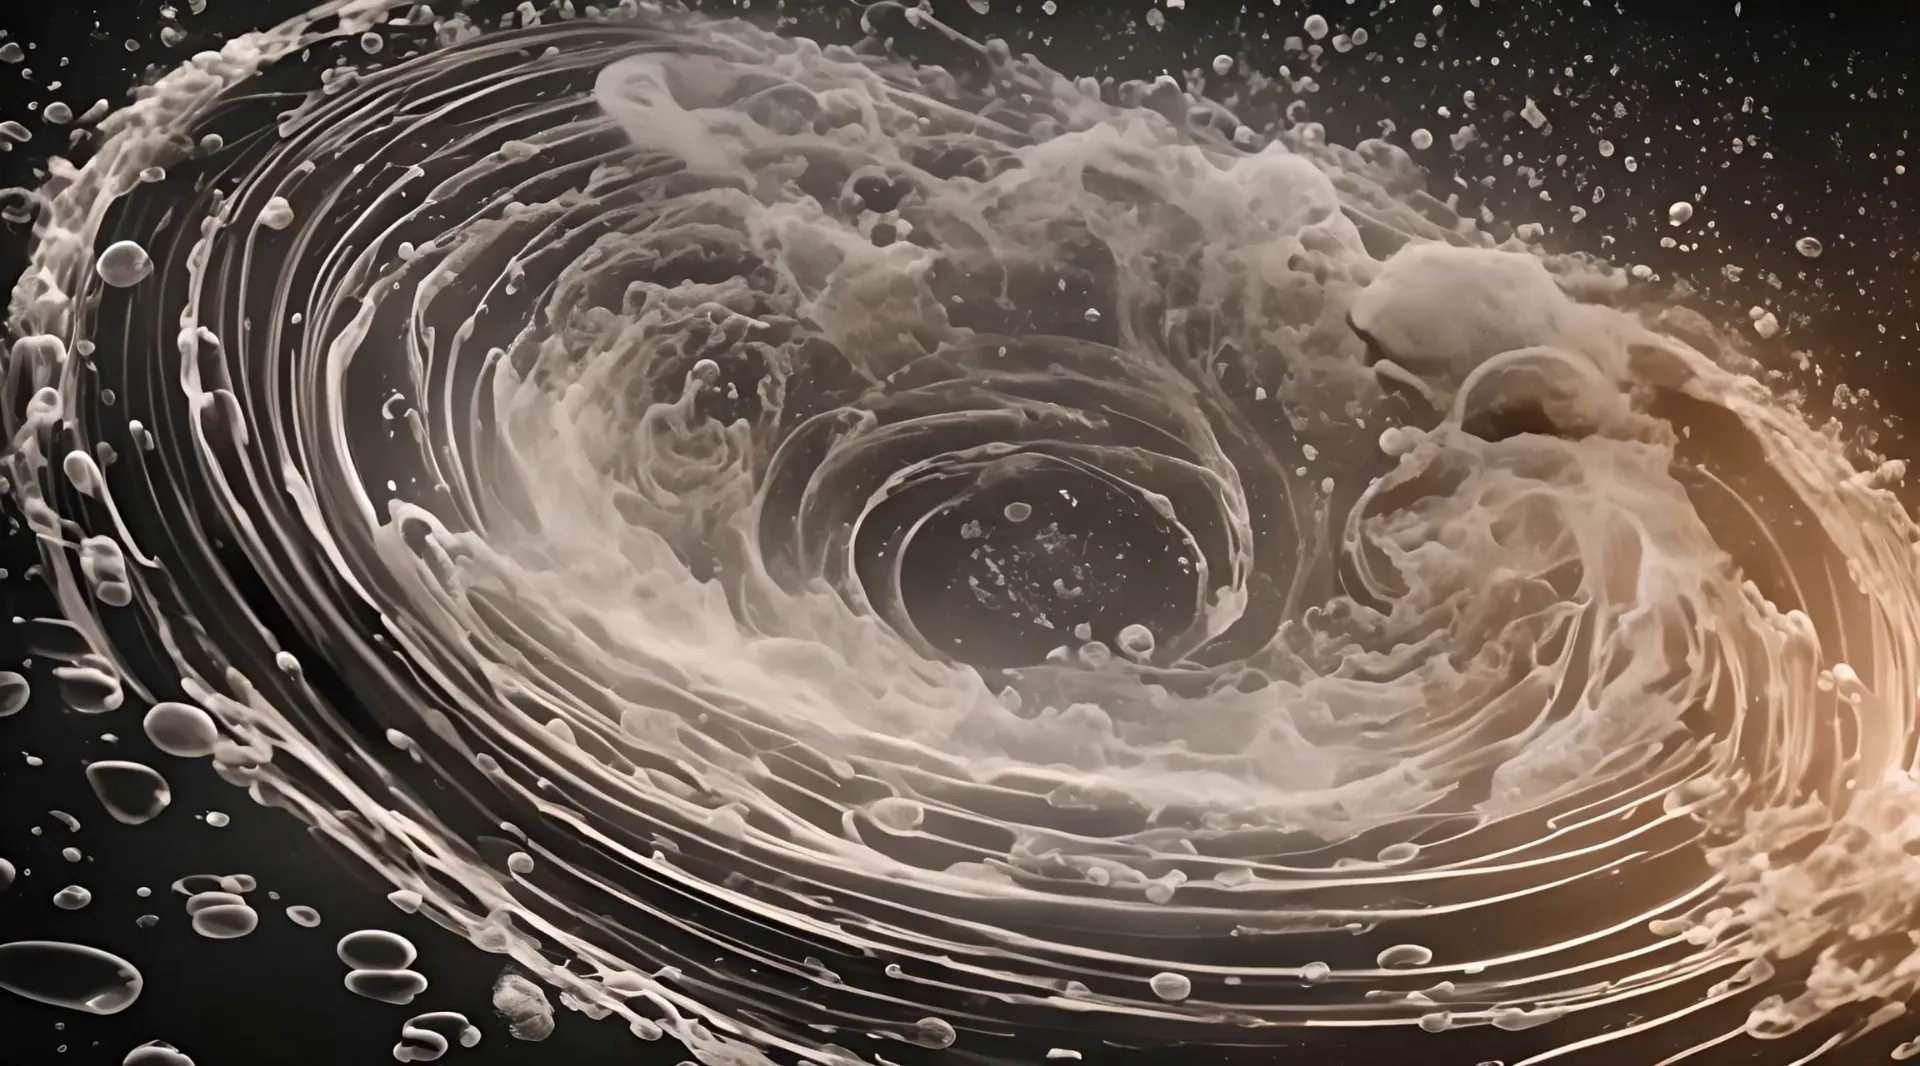 Whirlpool Fantasy Dreamy Video Backdrop